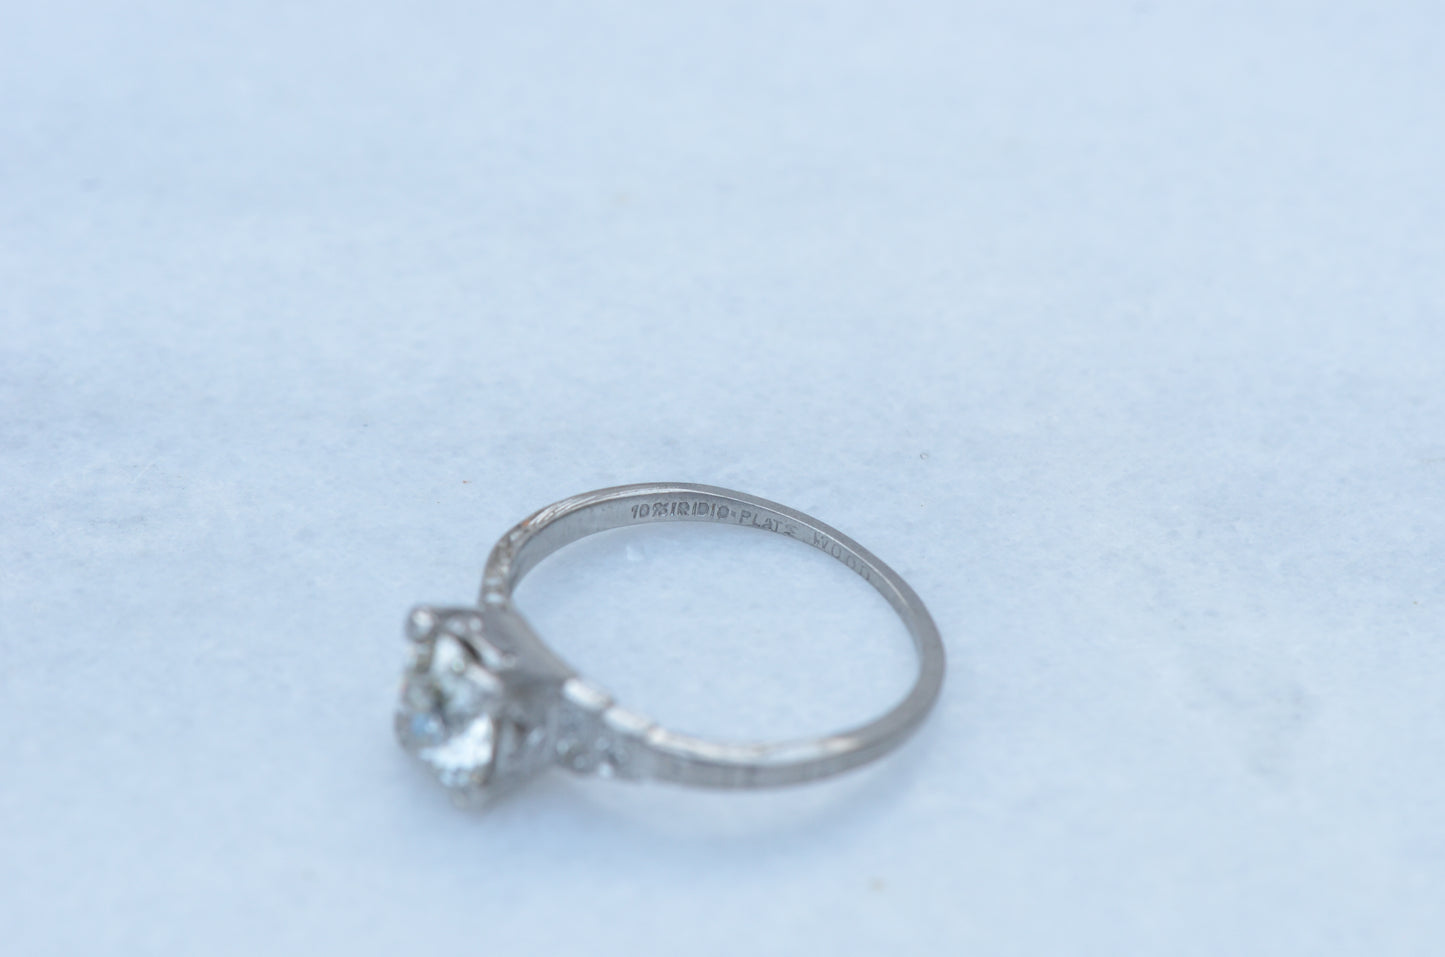 Scintillating Art Deco Engagement Ring